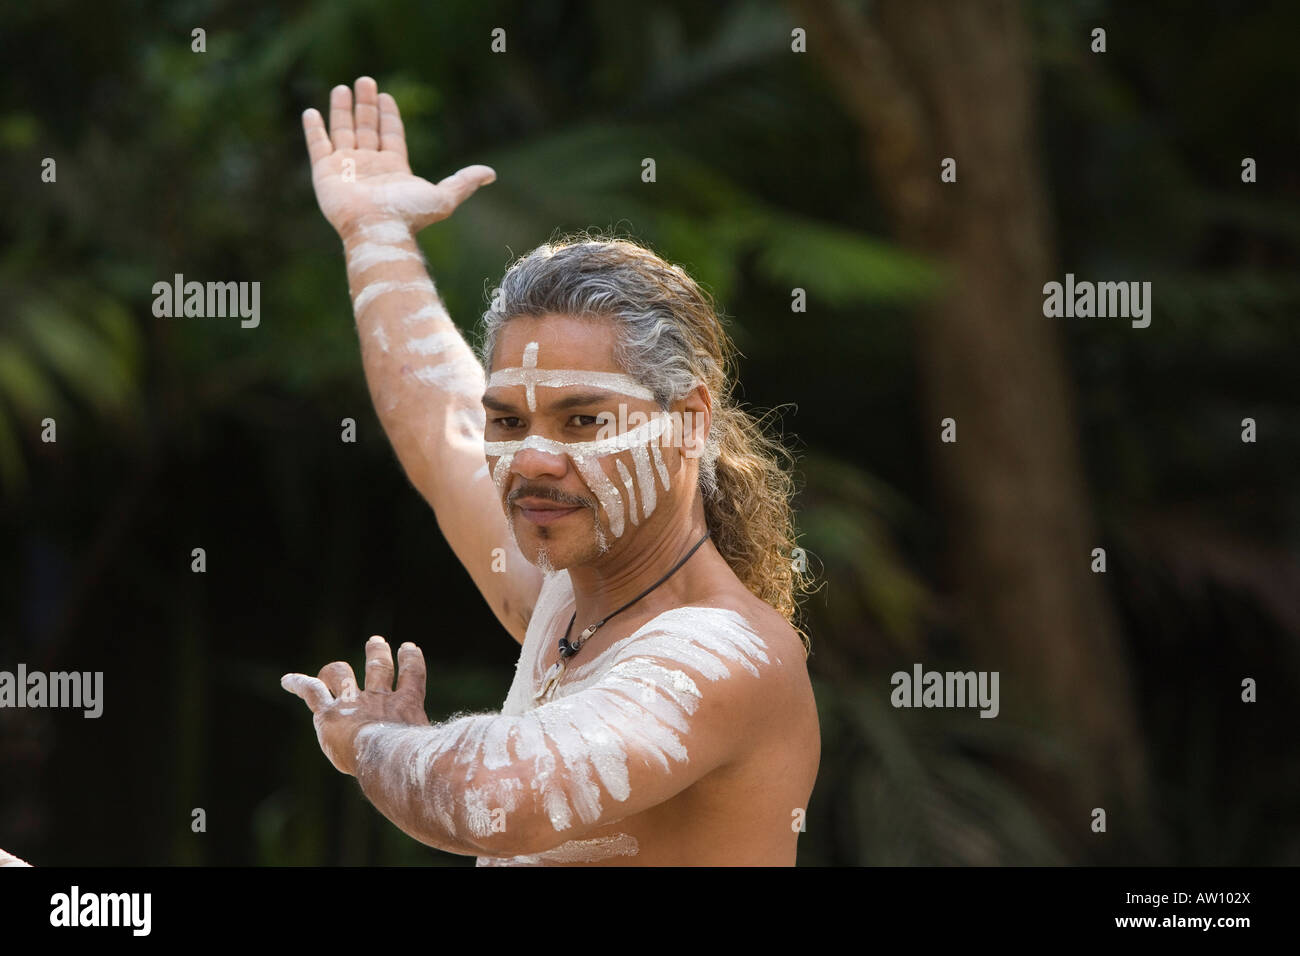 Native Australian Wiruungga Dunggiirr Aboriginal applies white